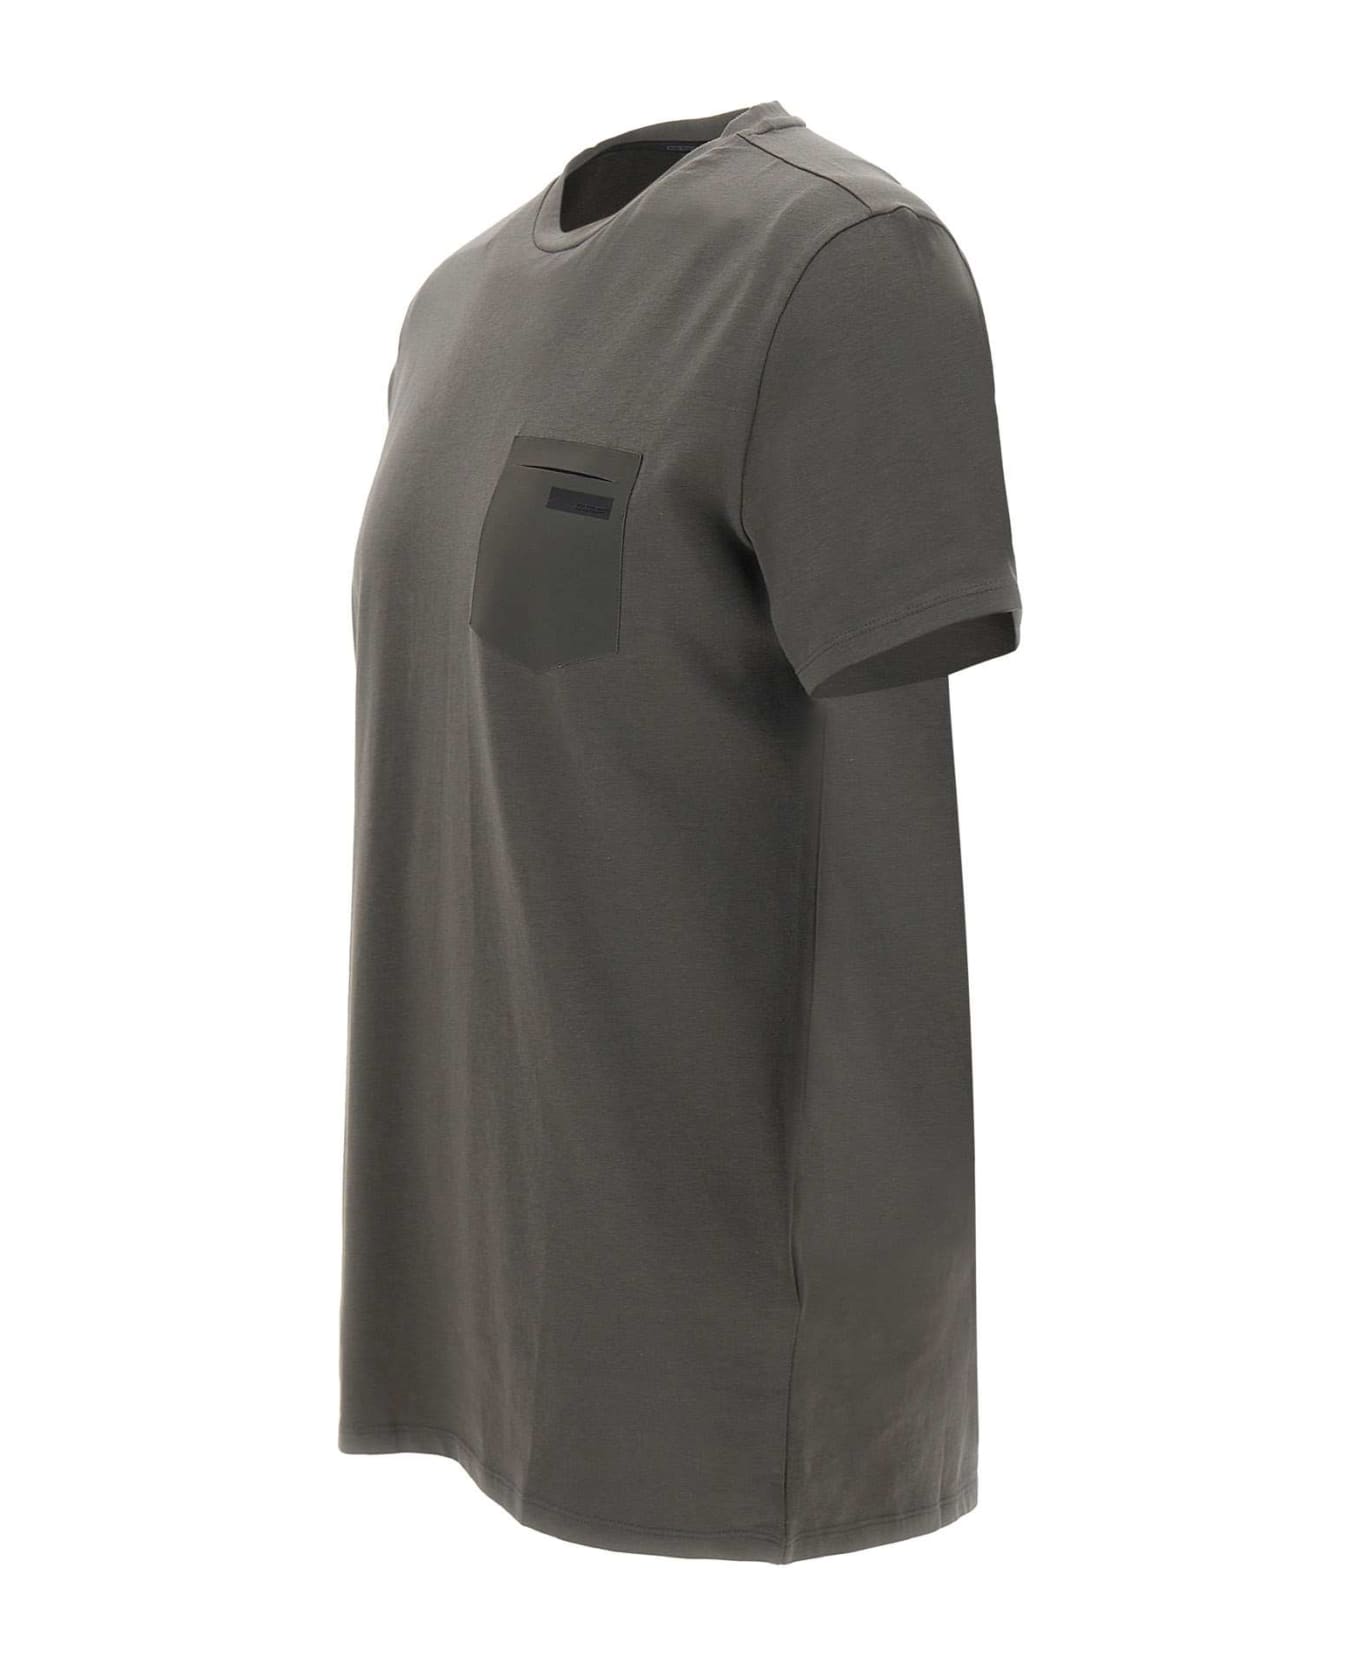 RRD - Roberto Ricci Design "revo Shirty" T-shirt - GREEN